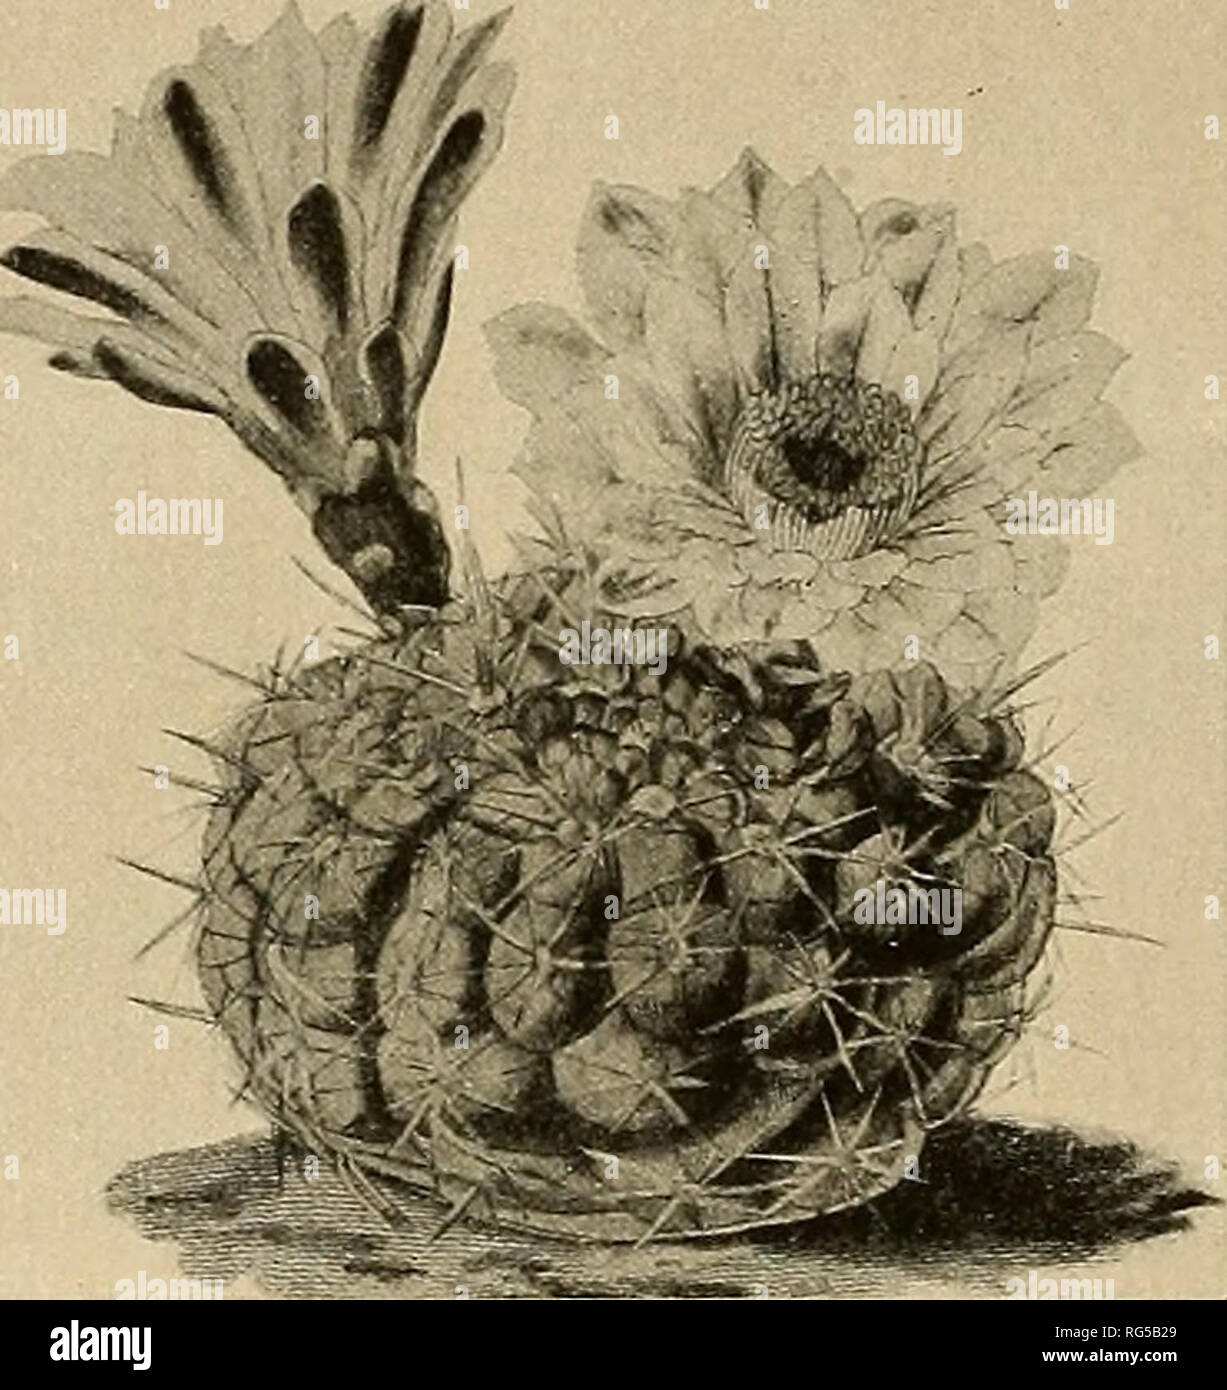 . The Cactaceae : descriptions and illustrations of plants of the cactus family. . Fig. 163.—Gymnocalycium denudatum. Fig. 164.—Gymnocalycium leeanum. Illustrations: Martius, Fl. Bras. 42: pi. 50, f. 1; Mollers Deutsche Gart. Zeit. 25: 474. f. 6, No. 3; Bliihende Kakteen 1: pi. 59; Schumann, Gesamtb. Kakteen f. 72; Monatsschr Kakteenk. 3: 158. f. I; 14: 41; 29: 141; Link and Otto, Icon. PL Rar. pi. 9; Schelle, Handb Kakteenk. 188. f. 119, as Echinocactus denudatus; De Laet, Cat. Gen. f. 10; Tribune Hort. 4: pi. 139, as E. denudatus var.; Schelle, Handb. Kakteenk. 189. f. 120, as E. denudatus b Stock Photo